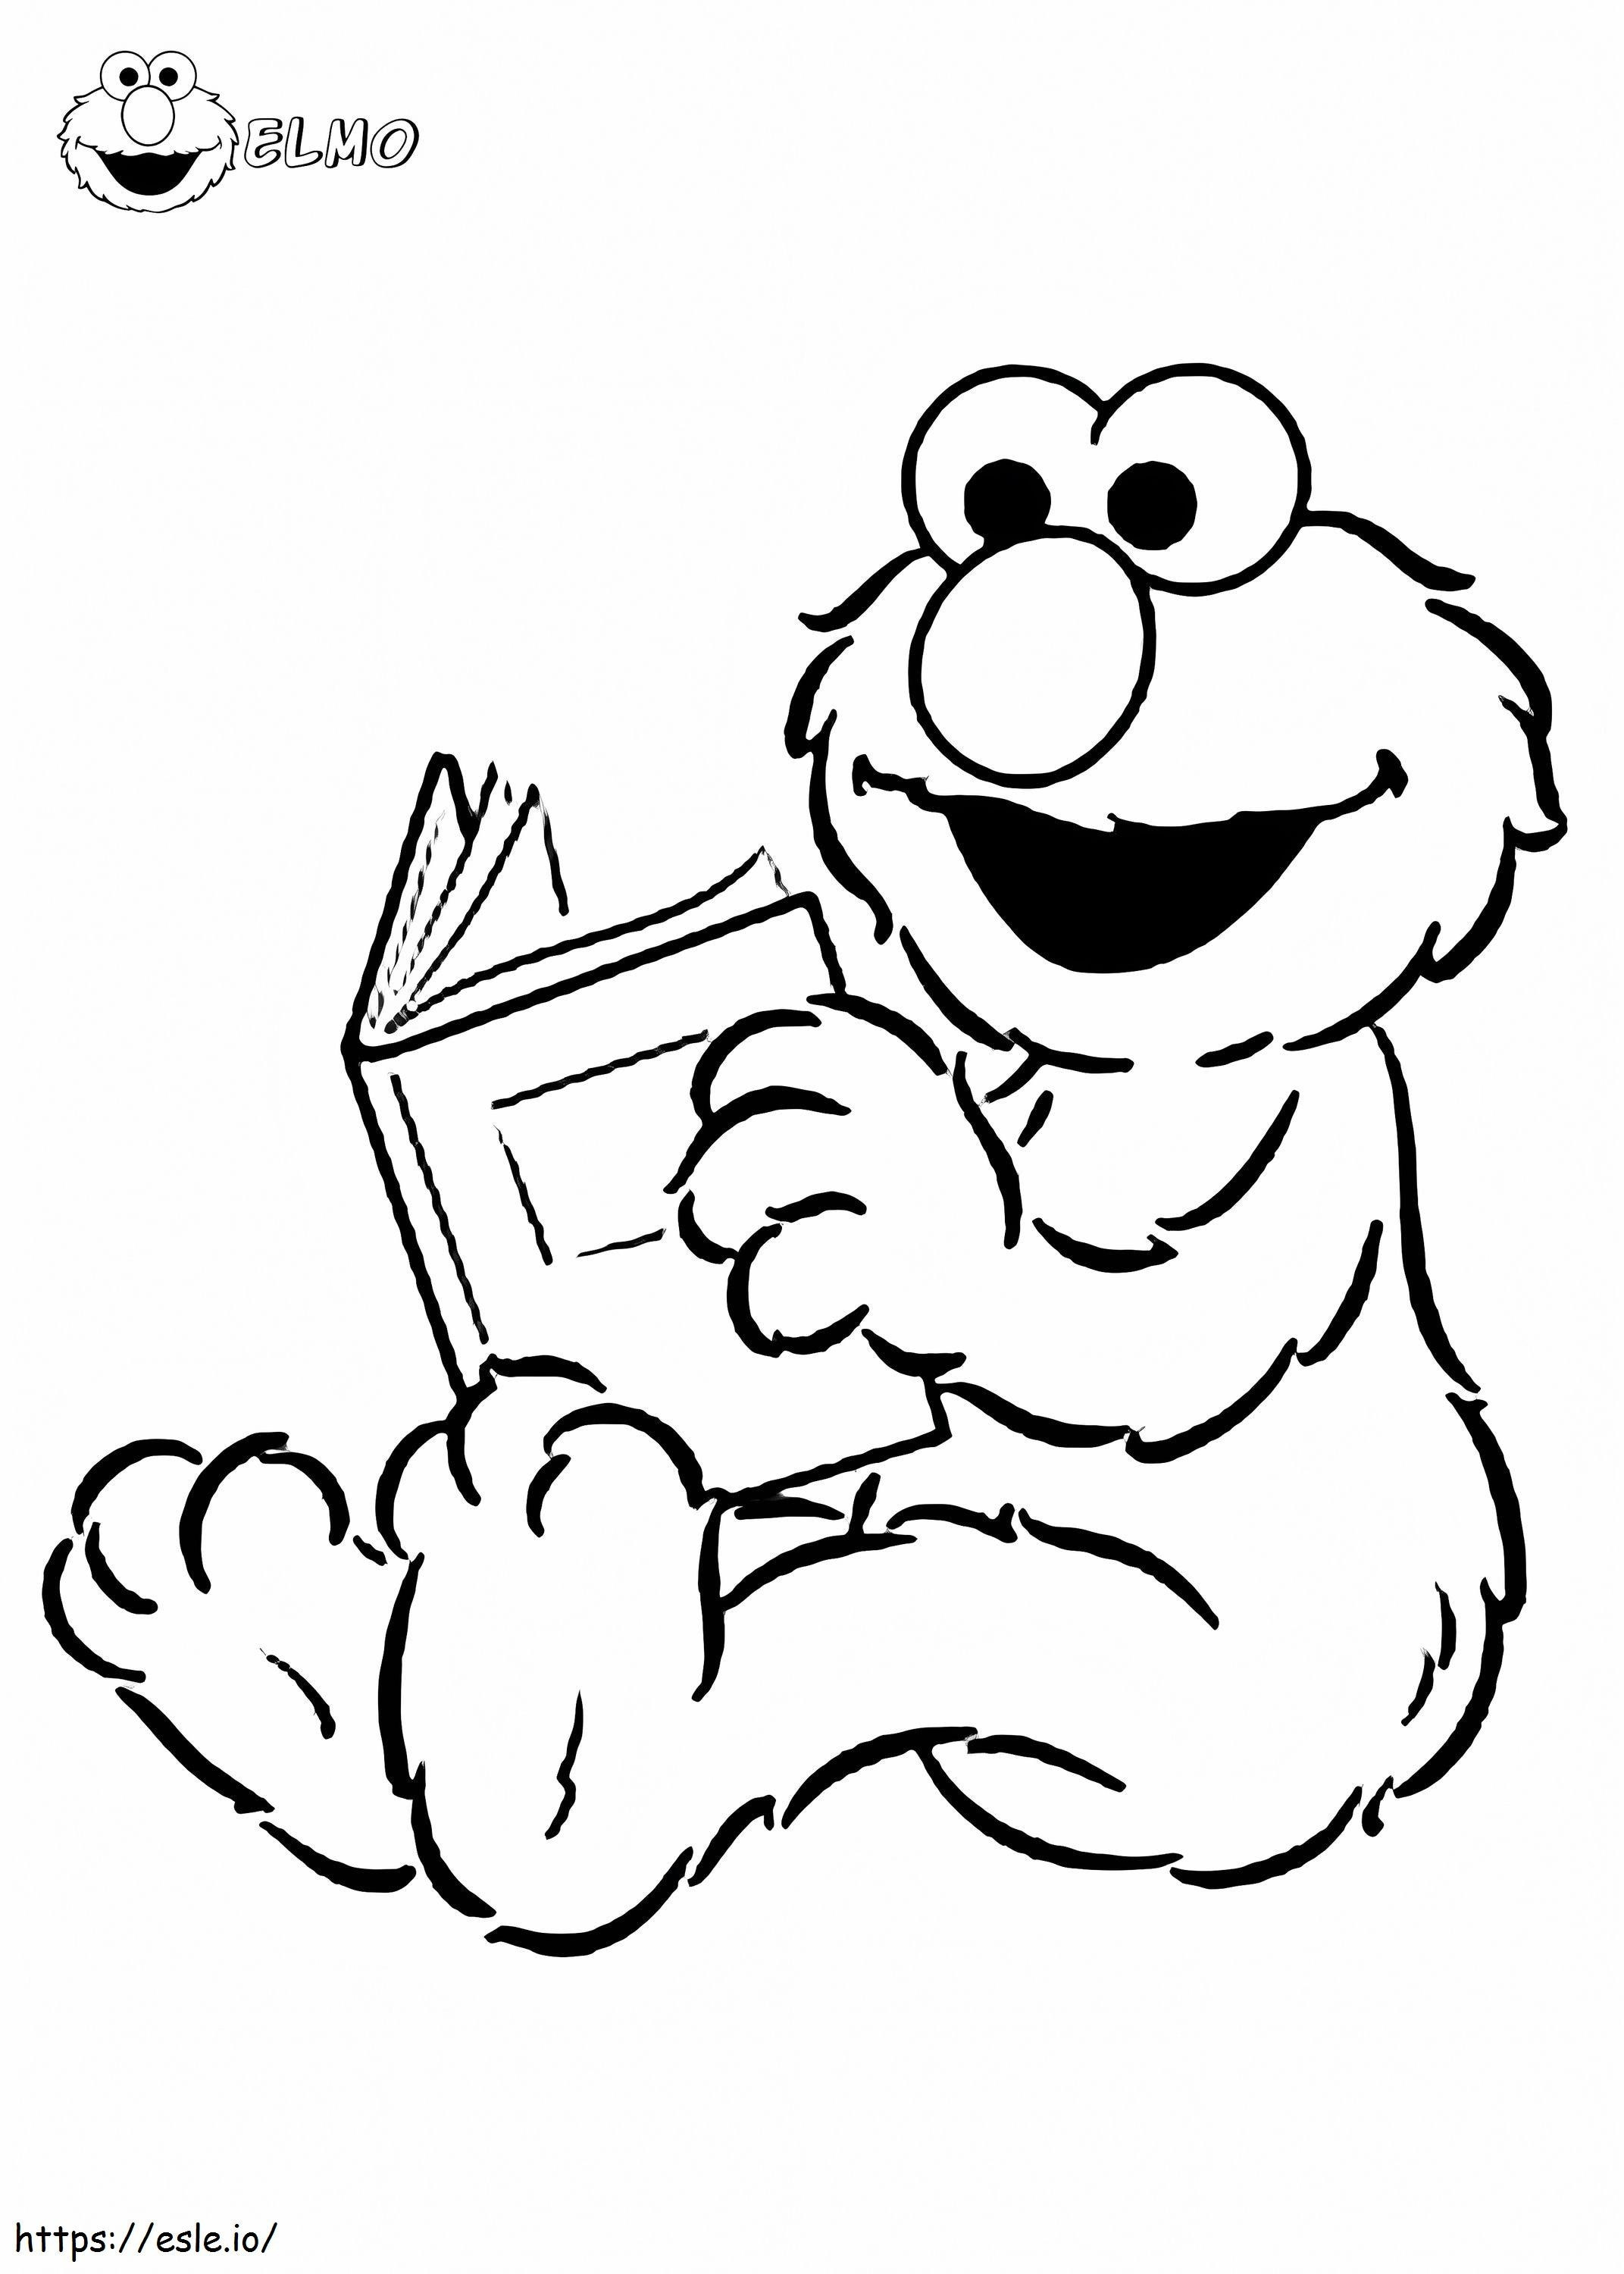 1577352679 Elmong Pages Free Printable Bratz Marvelous Photo Ideas Sesame Street Ernie coloring page